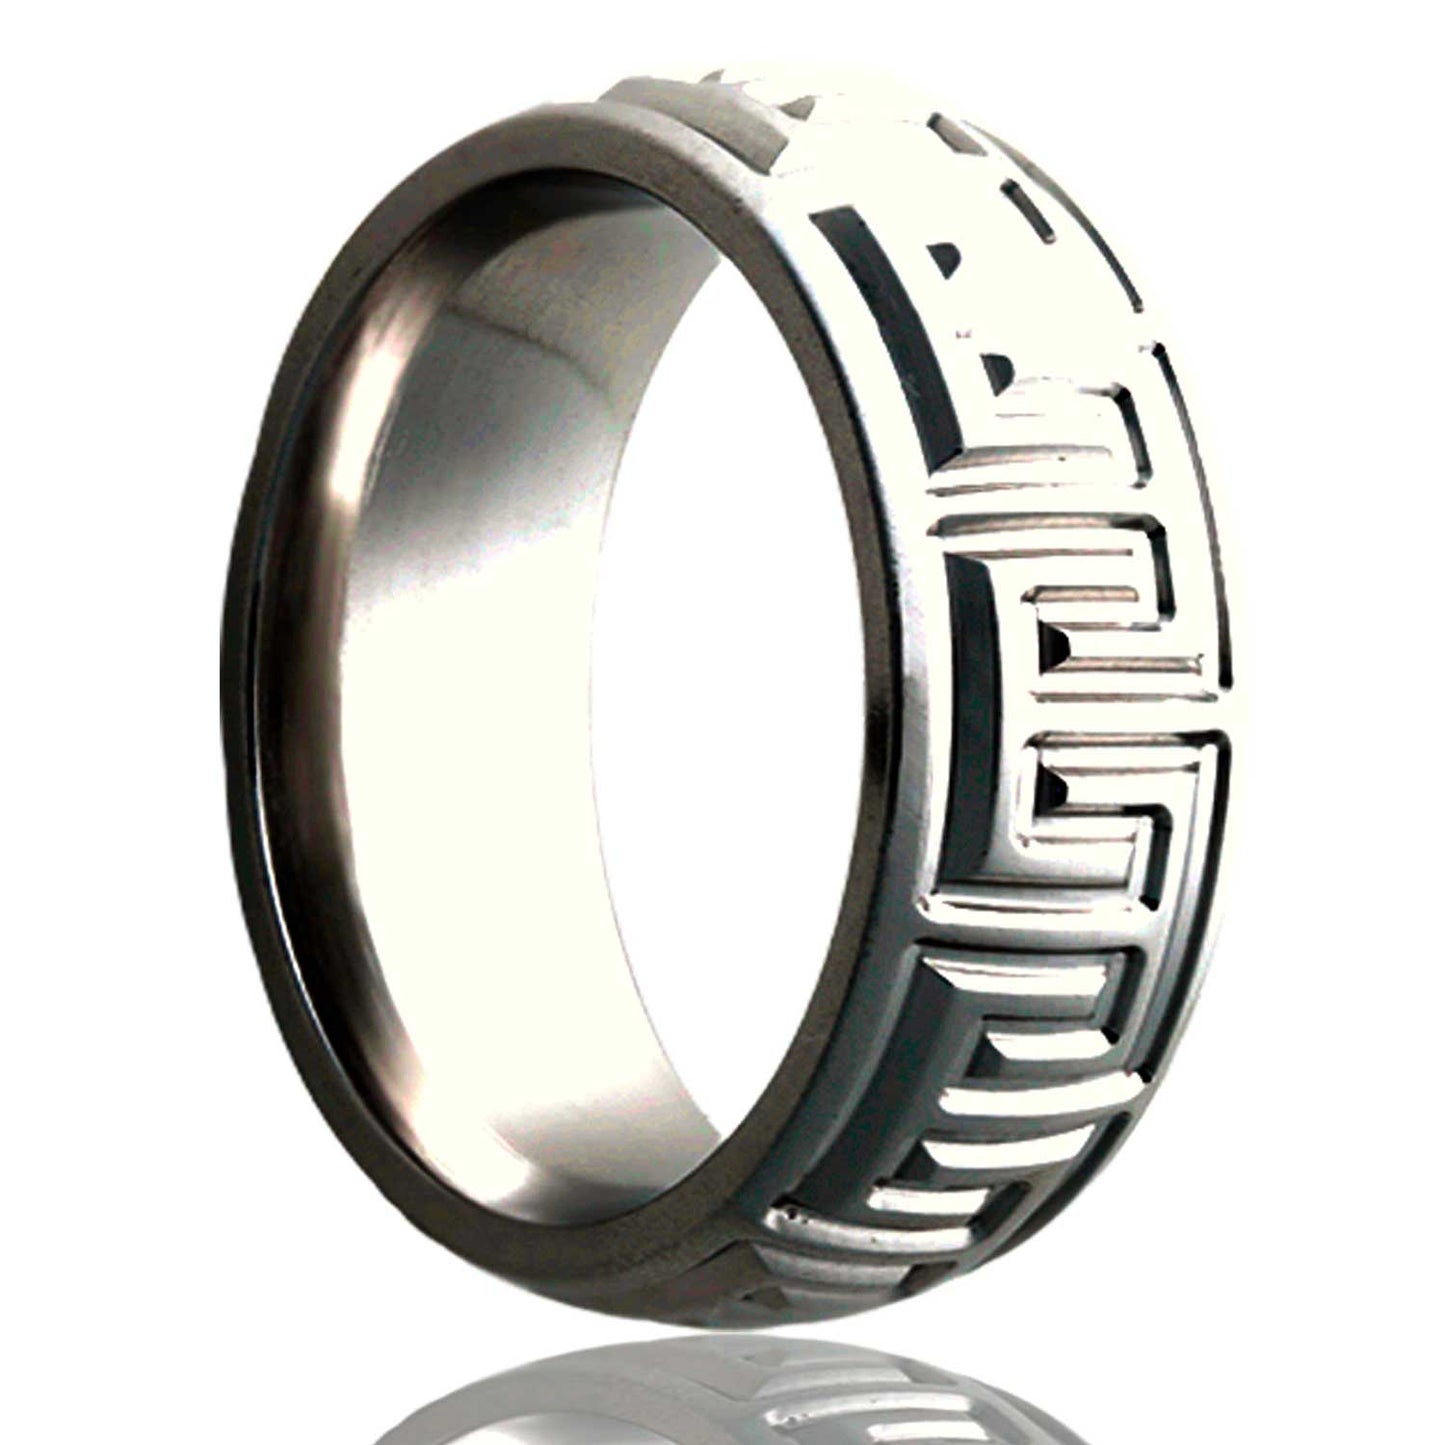 A greek key domed titanium wedding band displayed on a neutral white background.